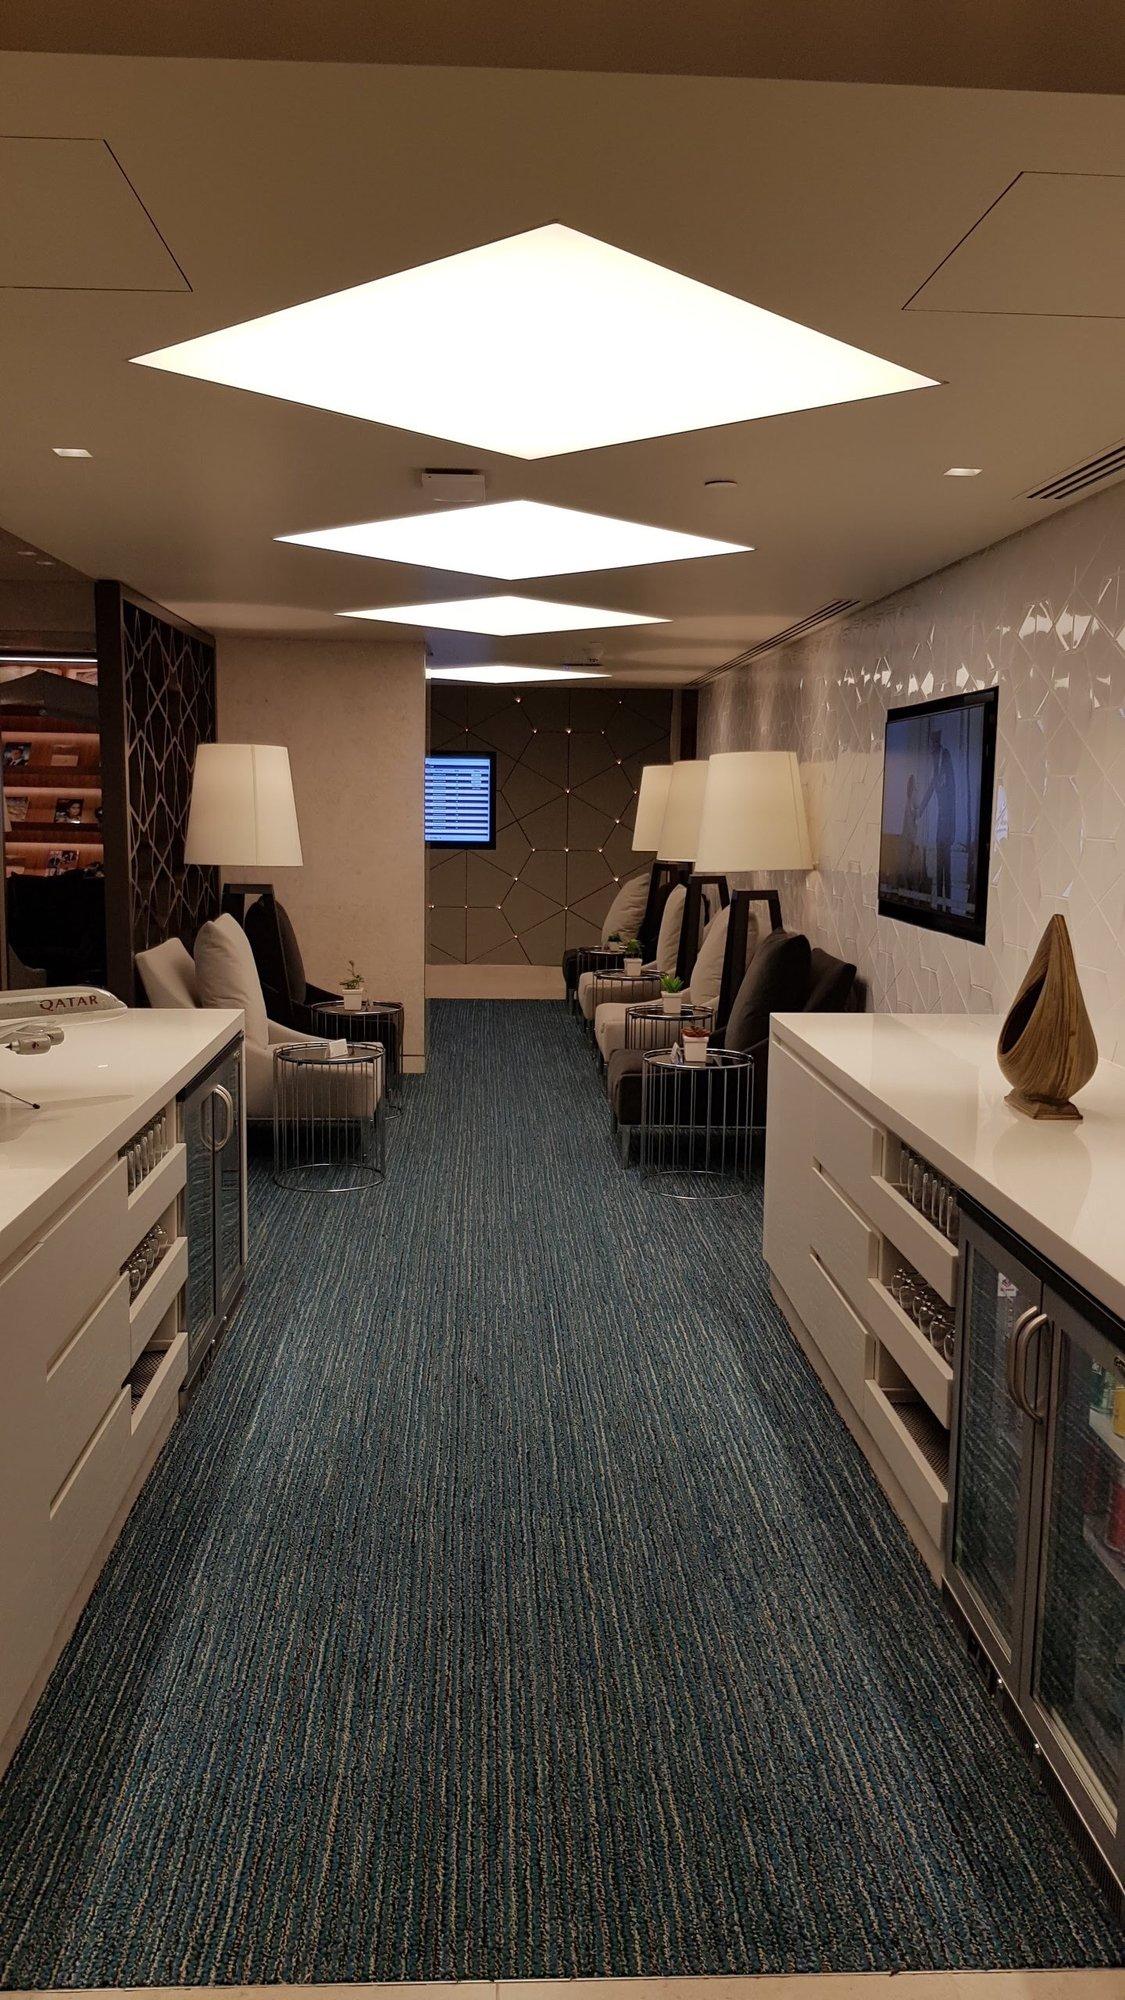 Qatar Airways Premium Lounge image 22 of 52